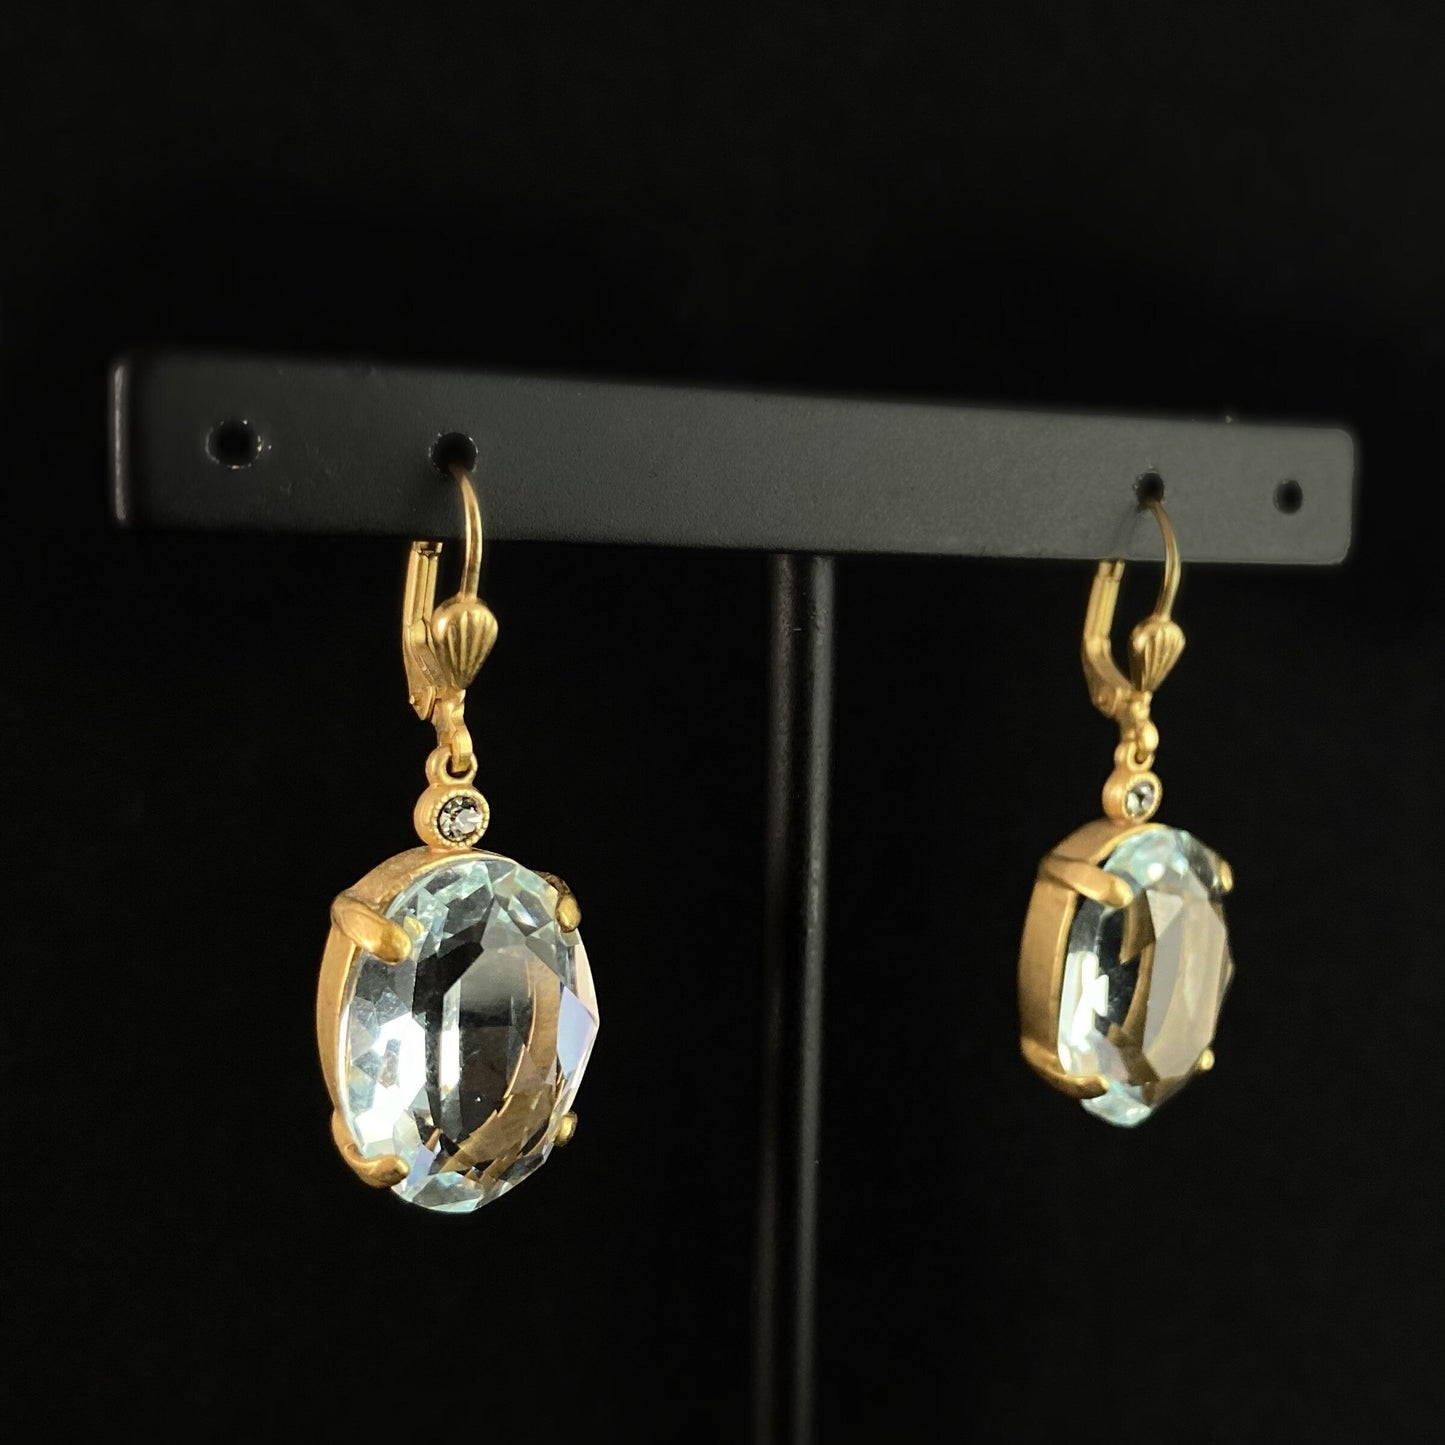 Oval Cut Swarovski Crystal Drop Earrings, Light Blue - La Vie Parisienne by Catherine Popesco